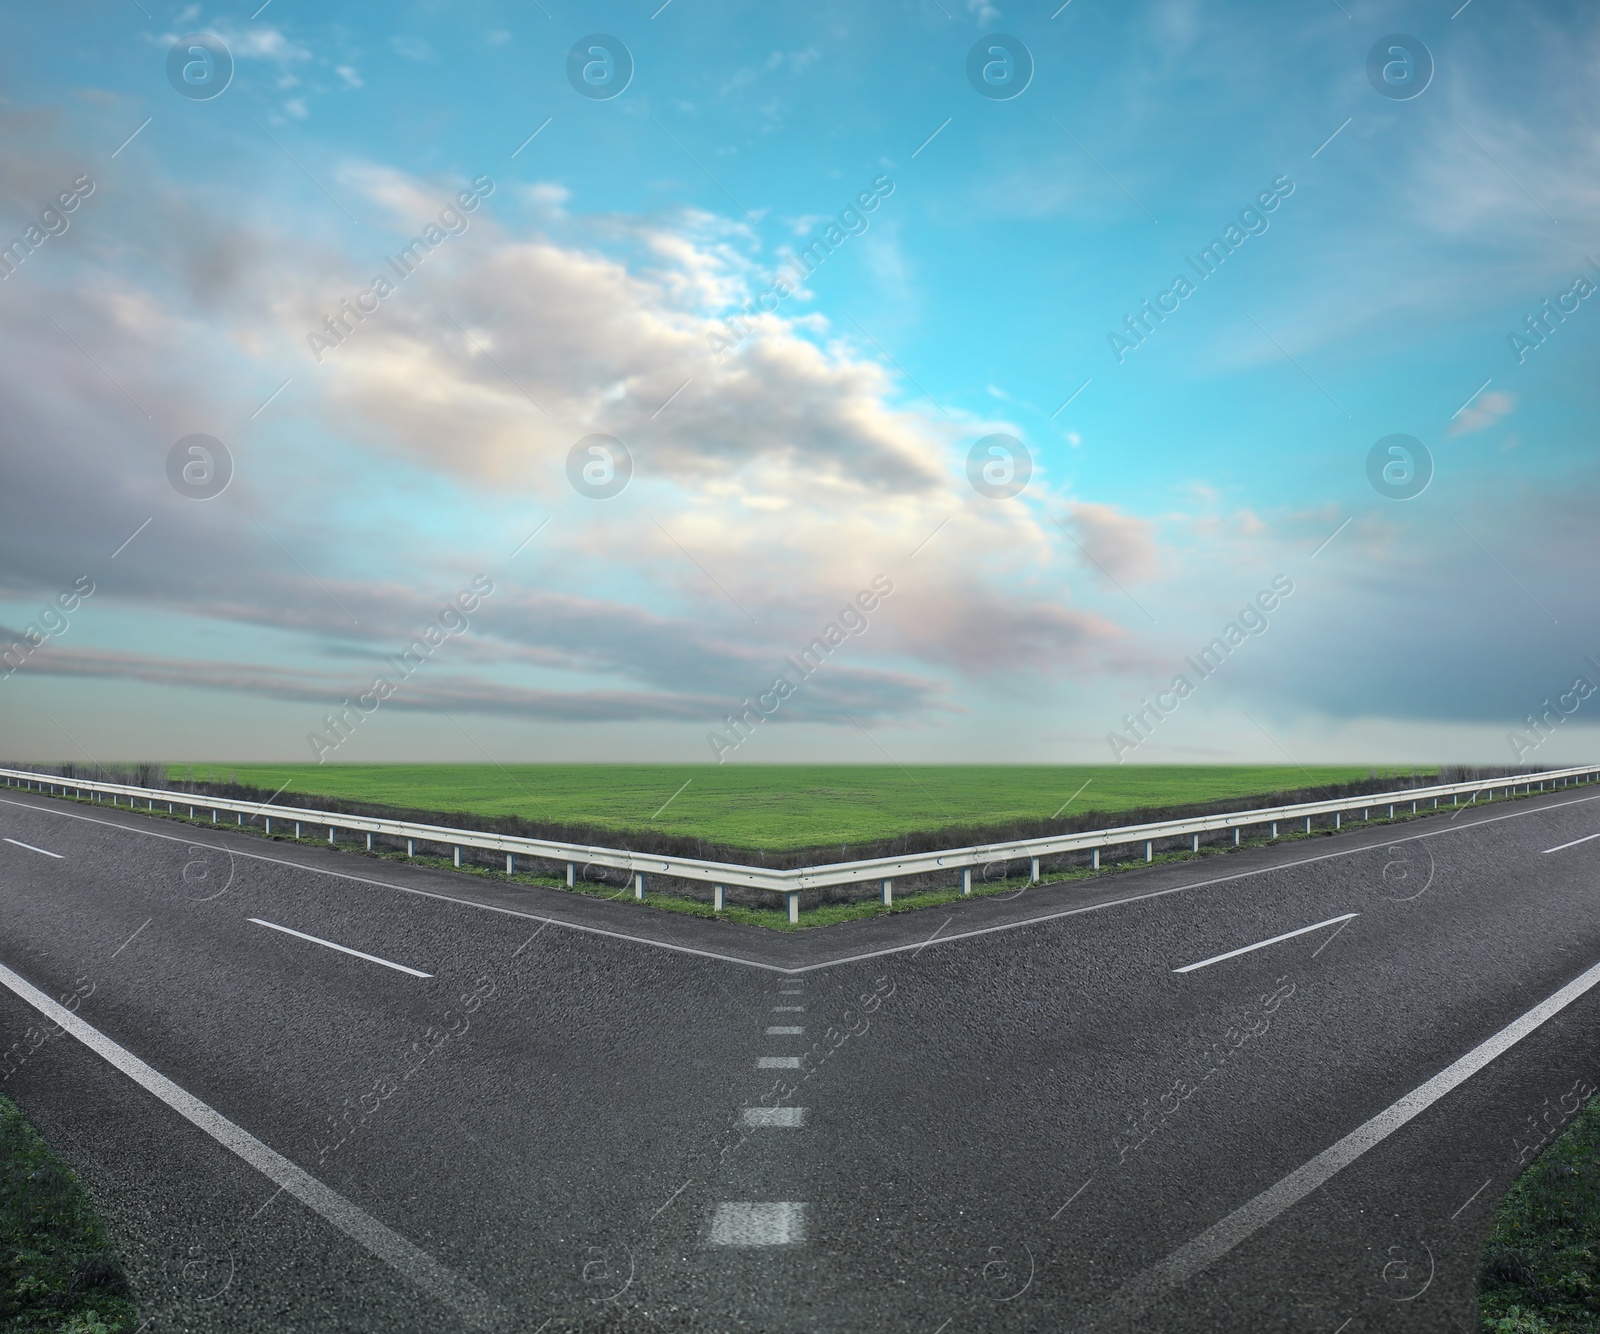 Image of Choosing way. Beautiful view of asphalt roads outdoors